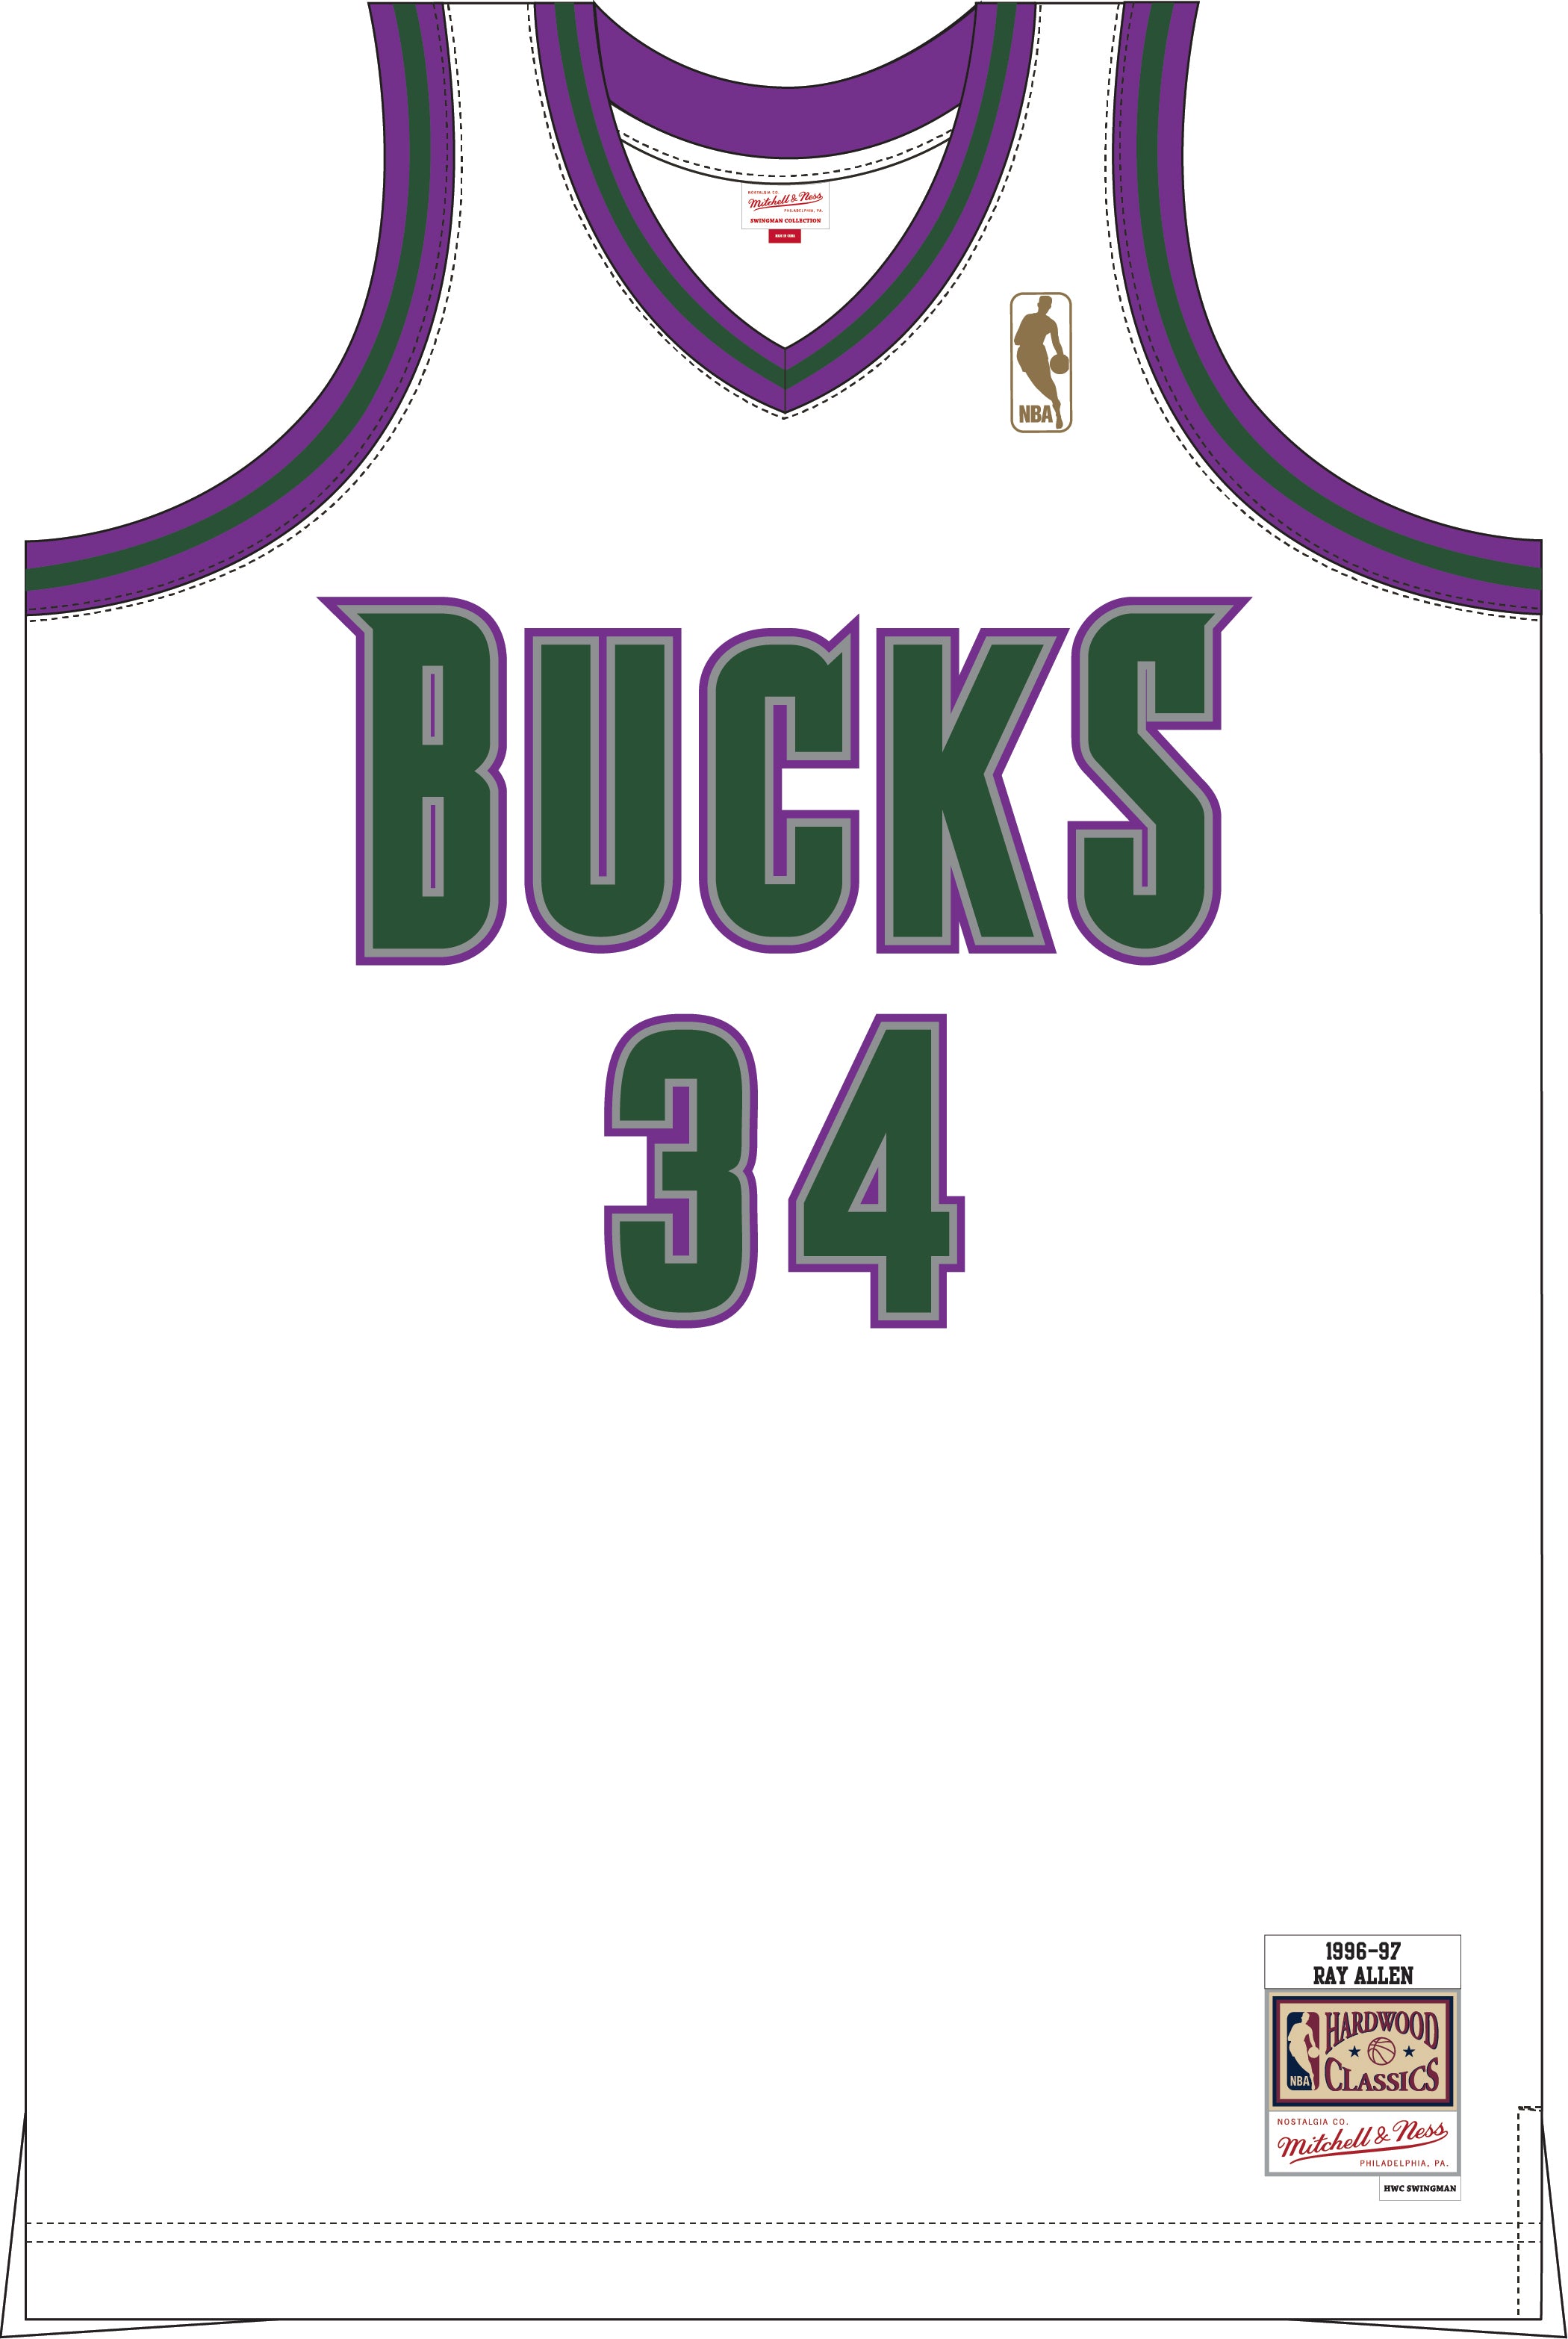 Milwaukee Bucks Basketball Jersey, Collections